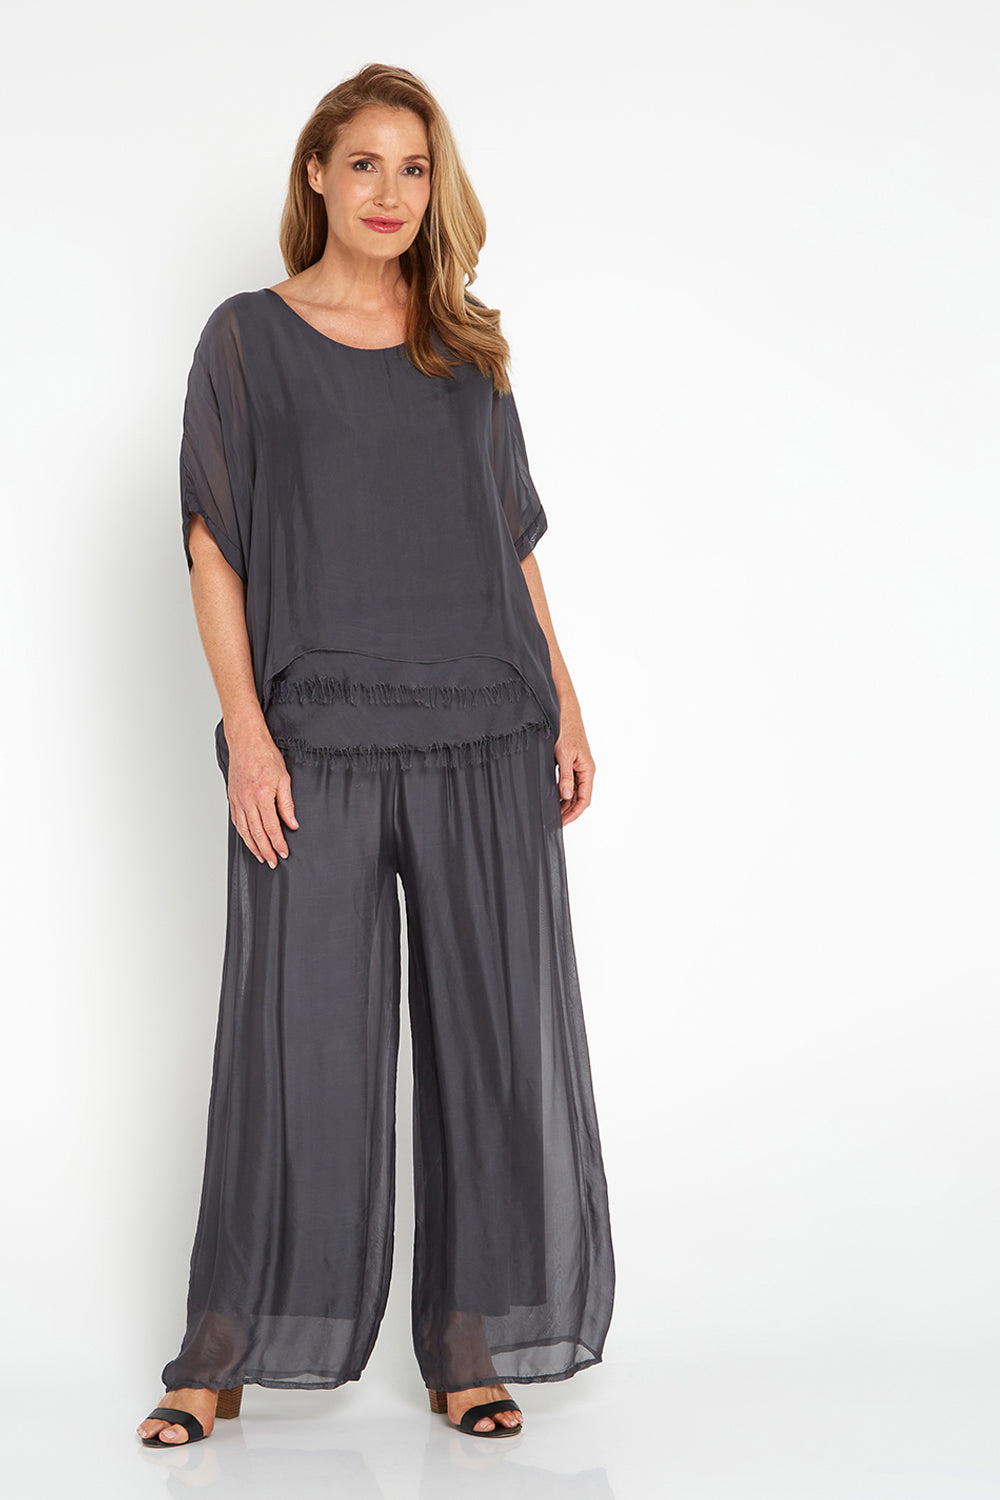 TULIO for Mature Fashion, Elegant Stylish Formal Pantsuits